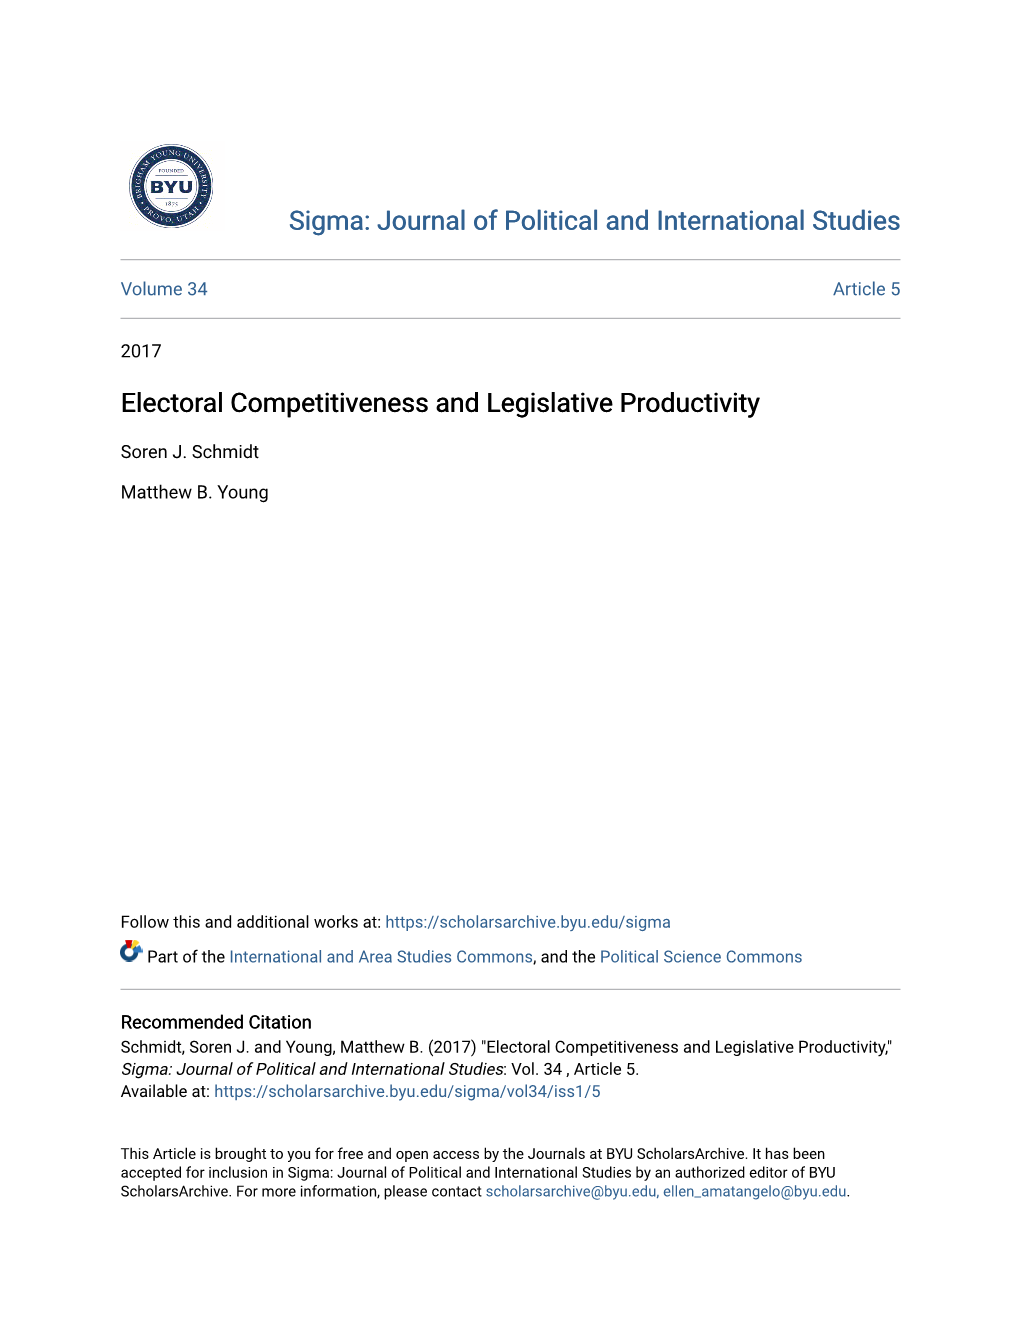 Electoral Competitiveness and Legislative Productivity